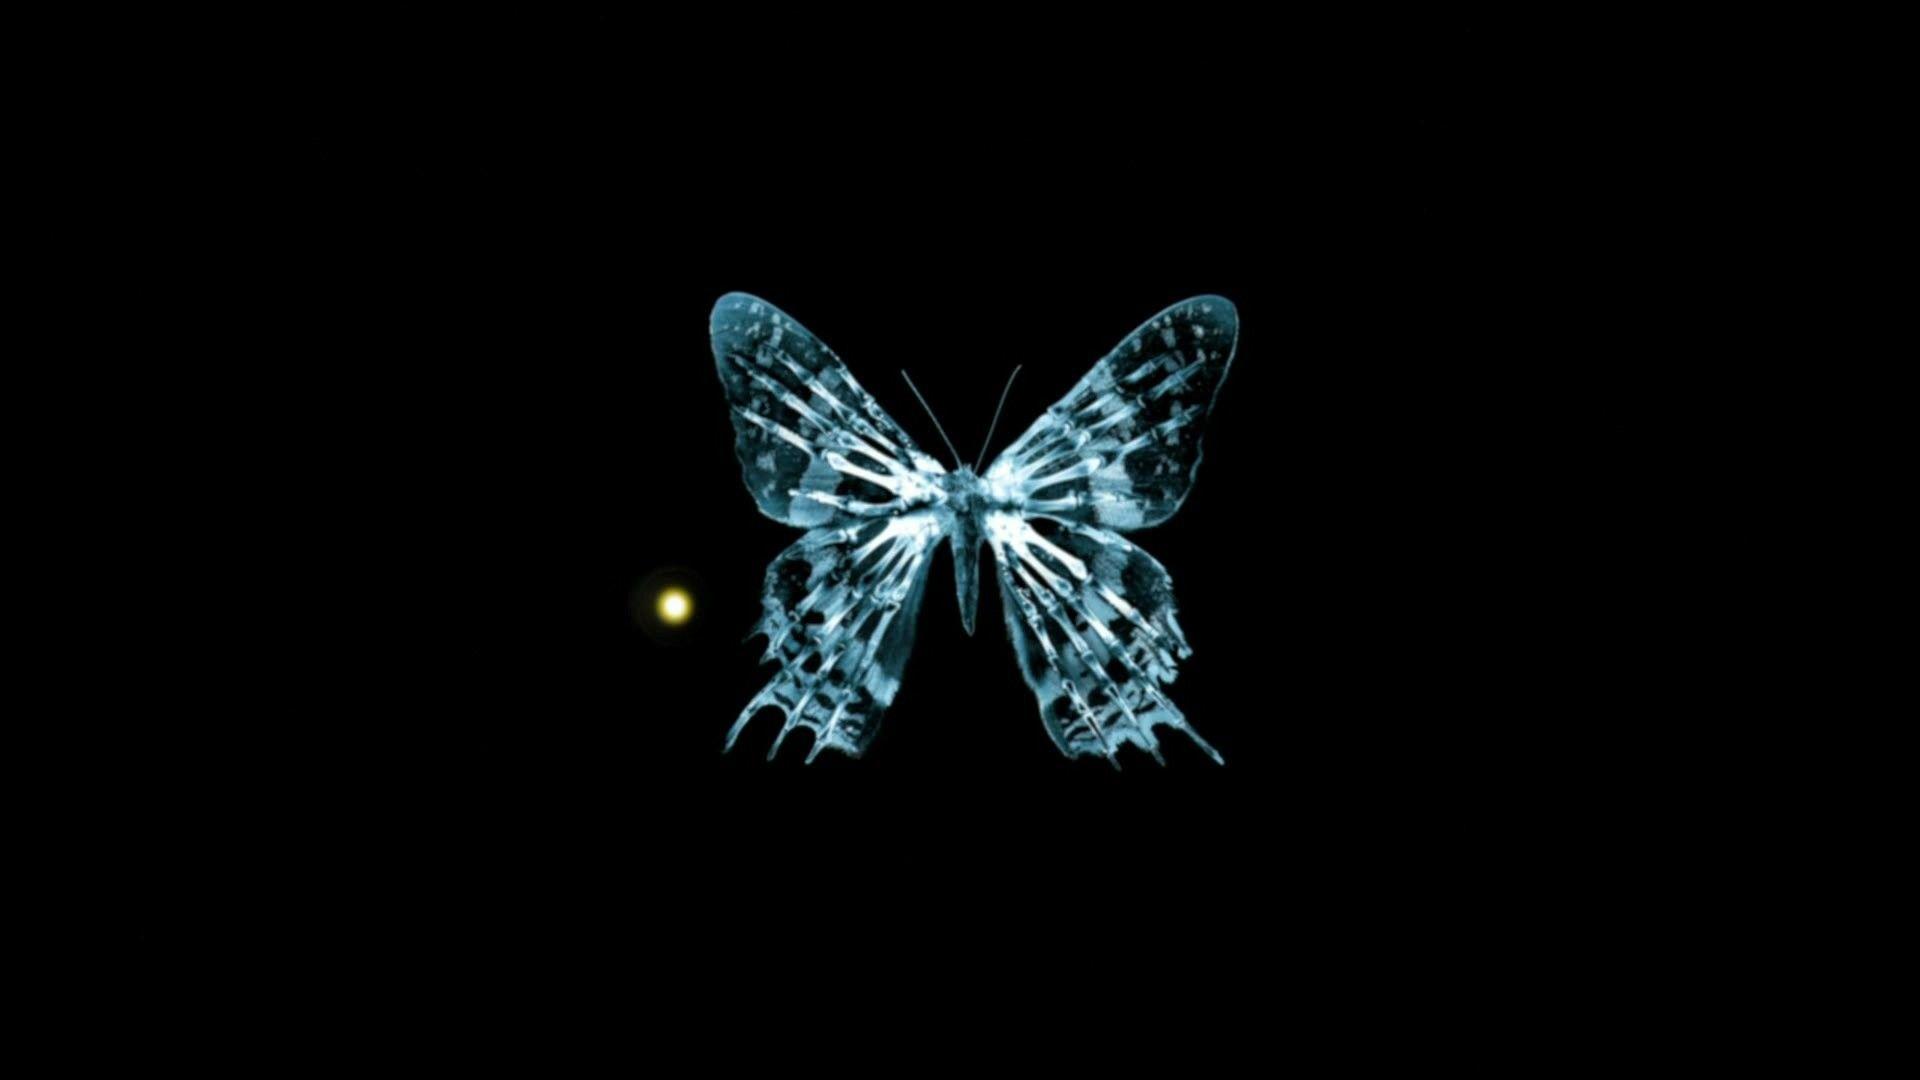 Dark Butterfly Wallpapers - Top Free Dark Butterfly Backgrounds